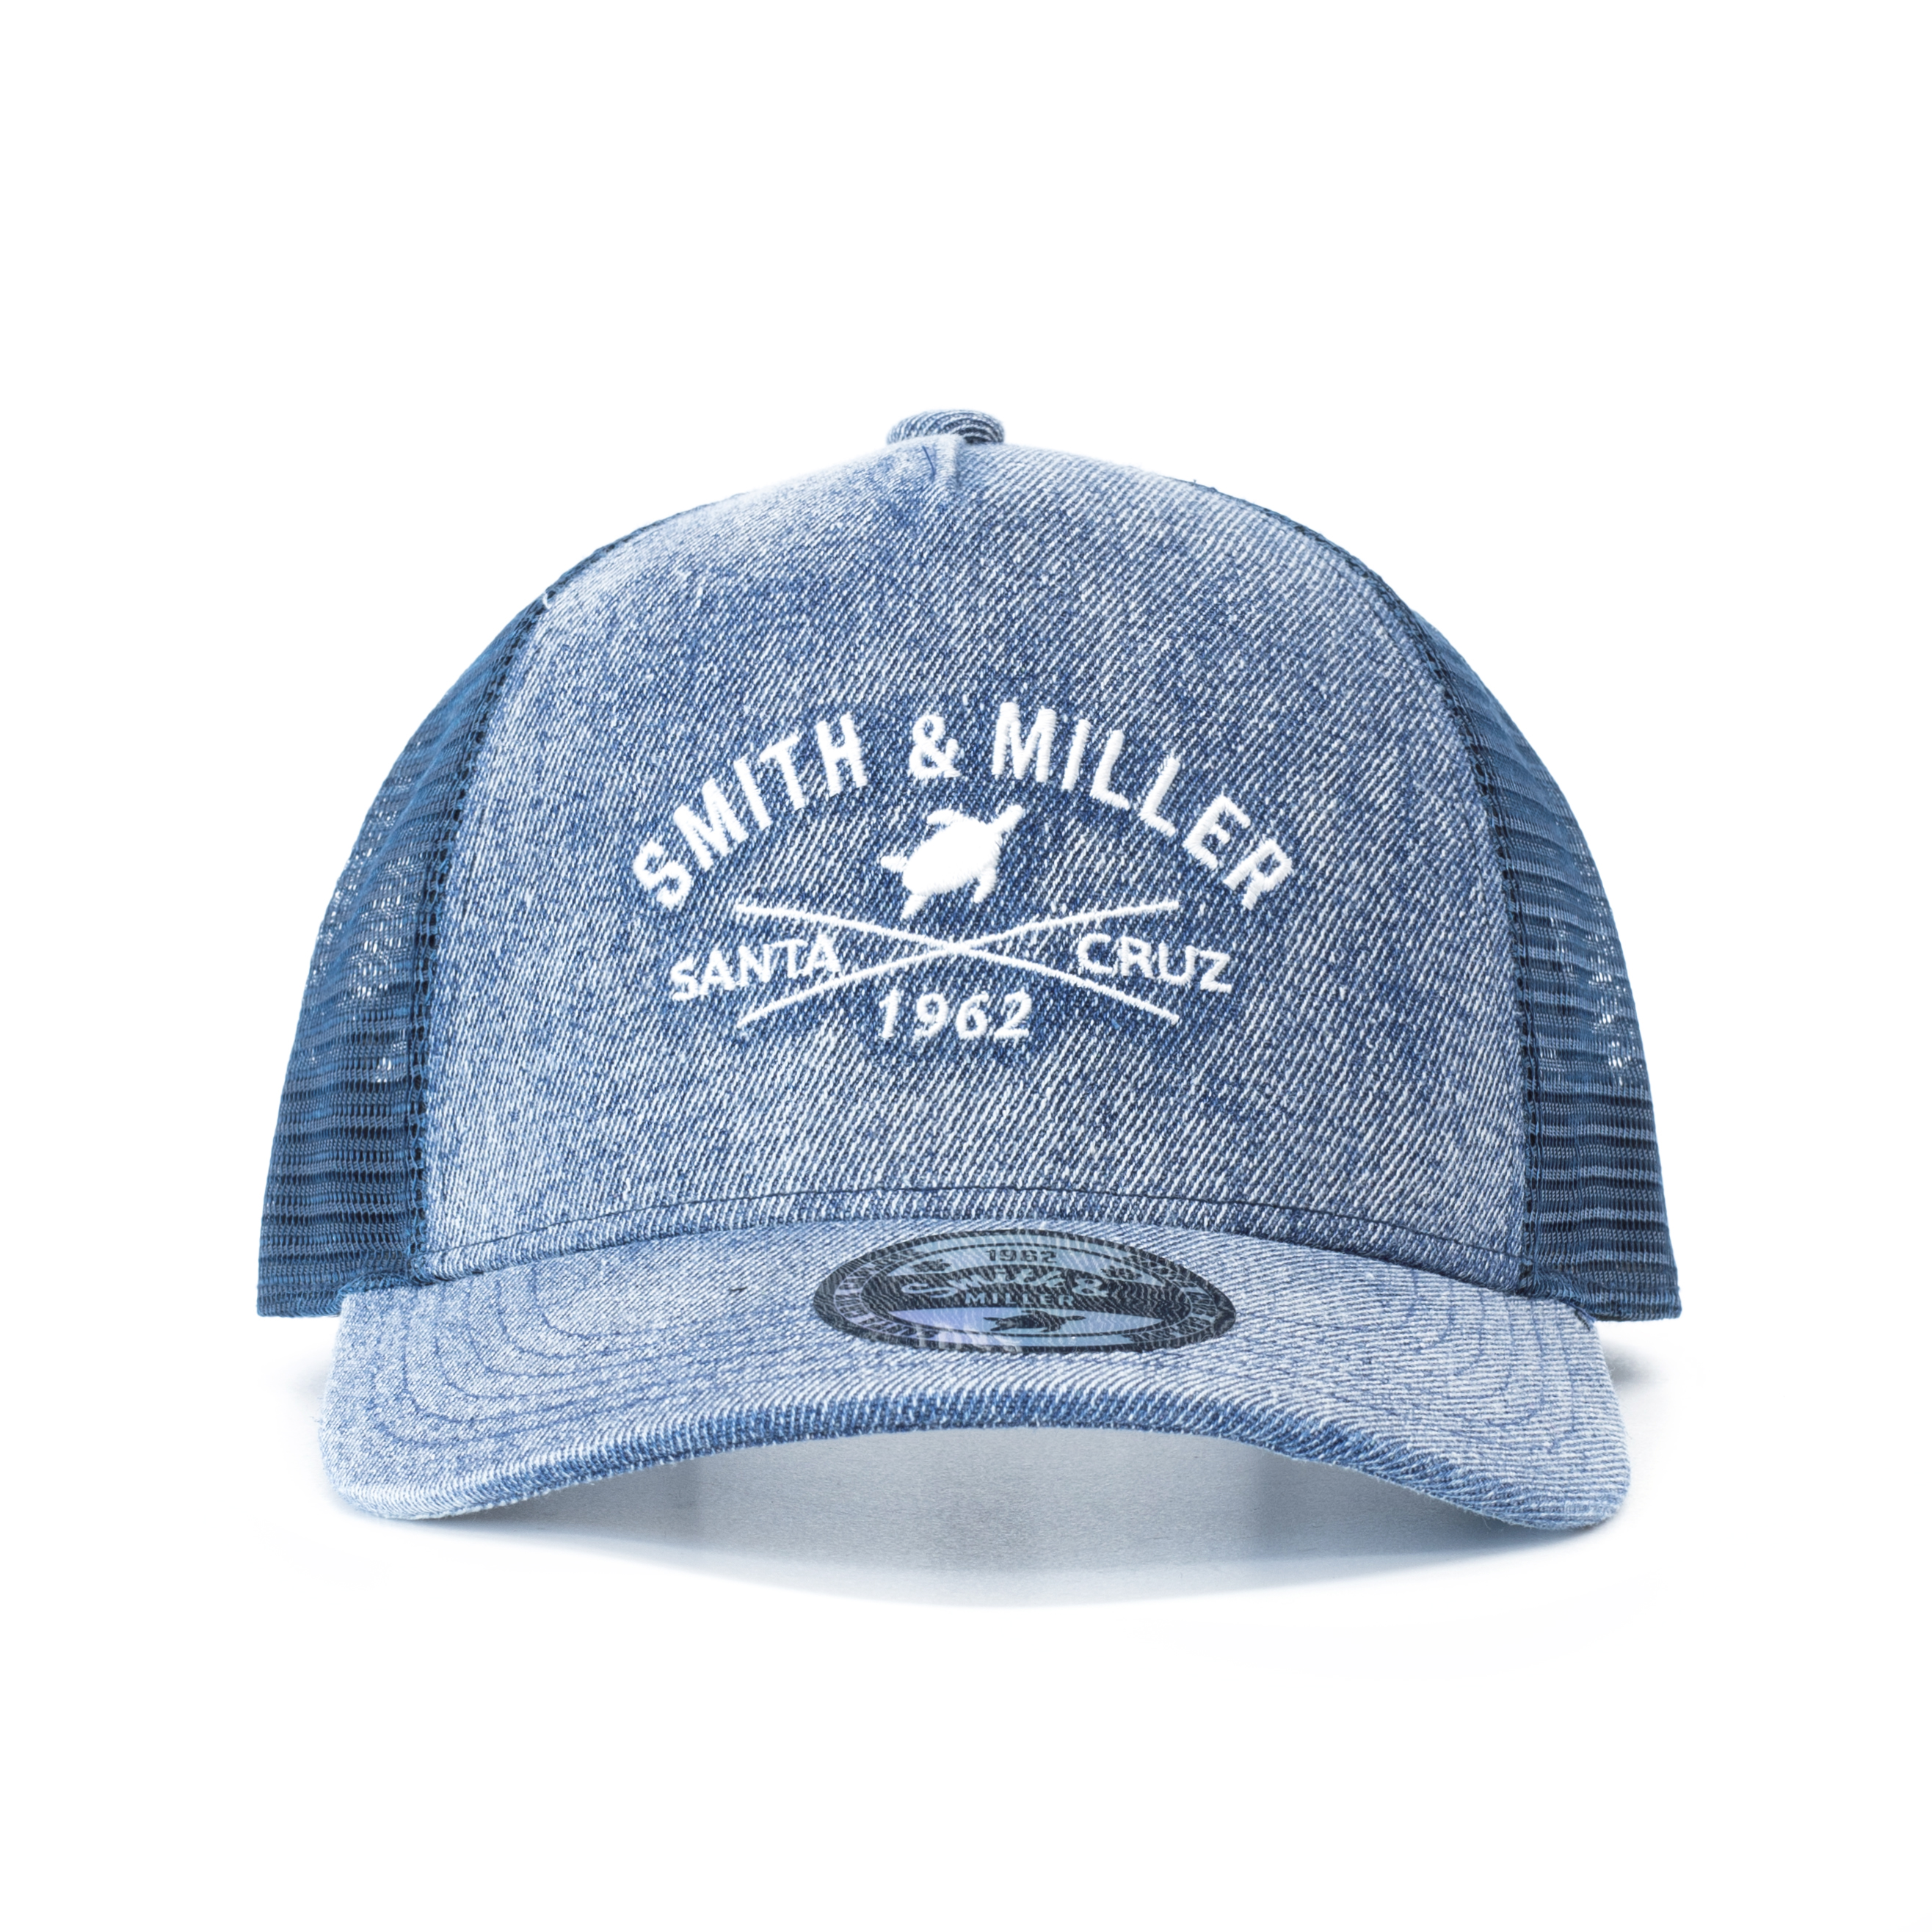 Smith & Miller Pasadena Trucker Cap, dark - denim